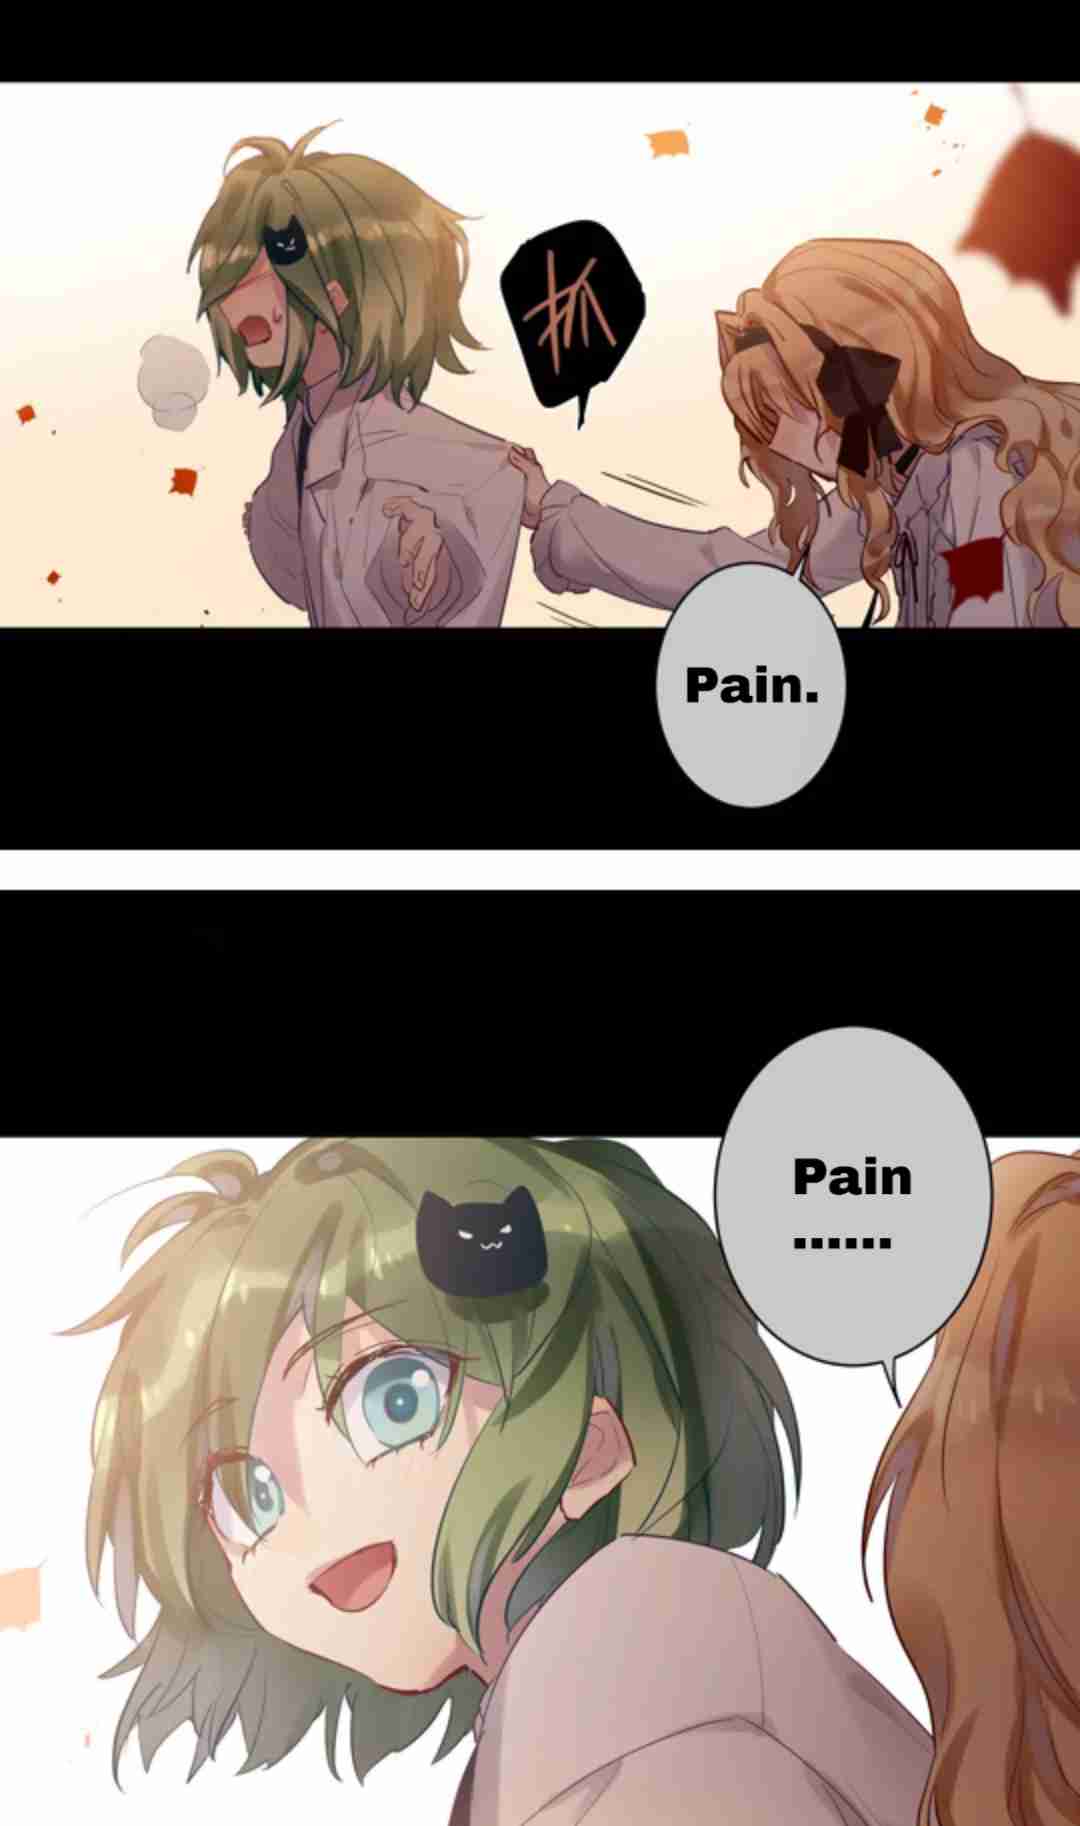 Houkai Gakuen 2 Side Stories Ch. 14 Origin of Science 3 PAIN